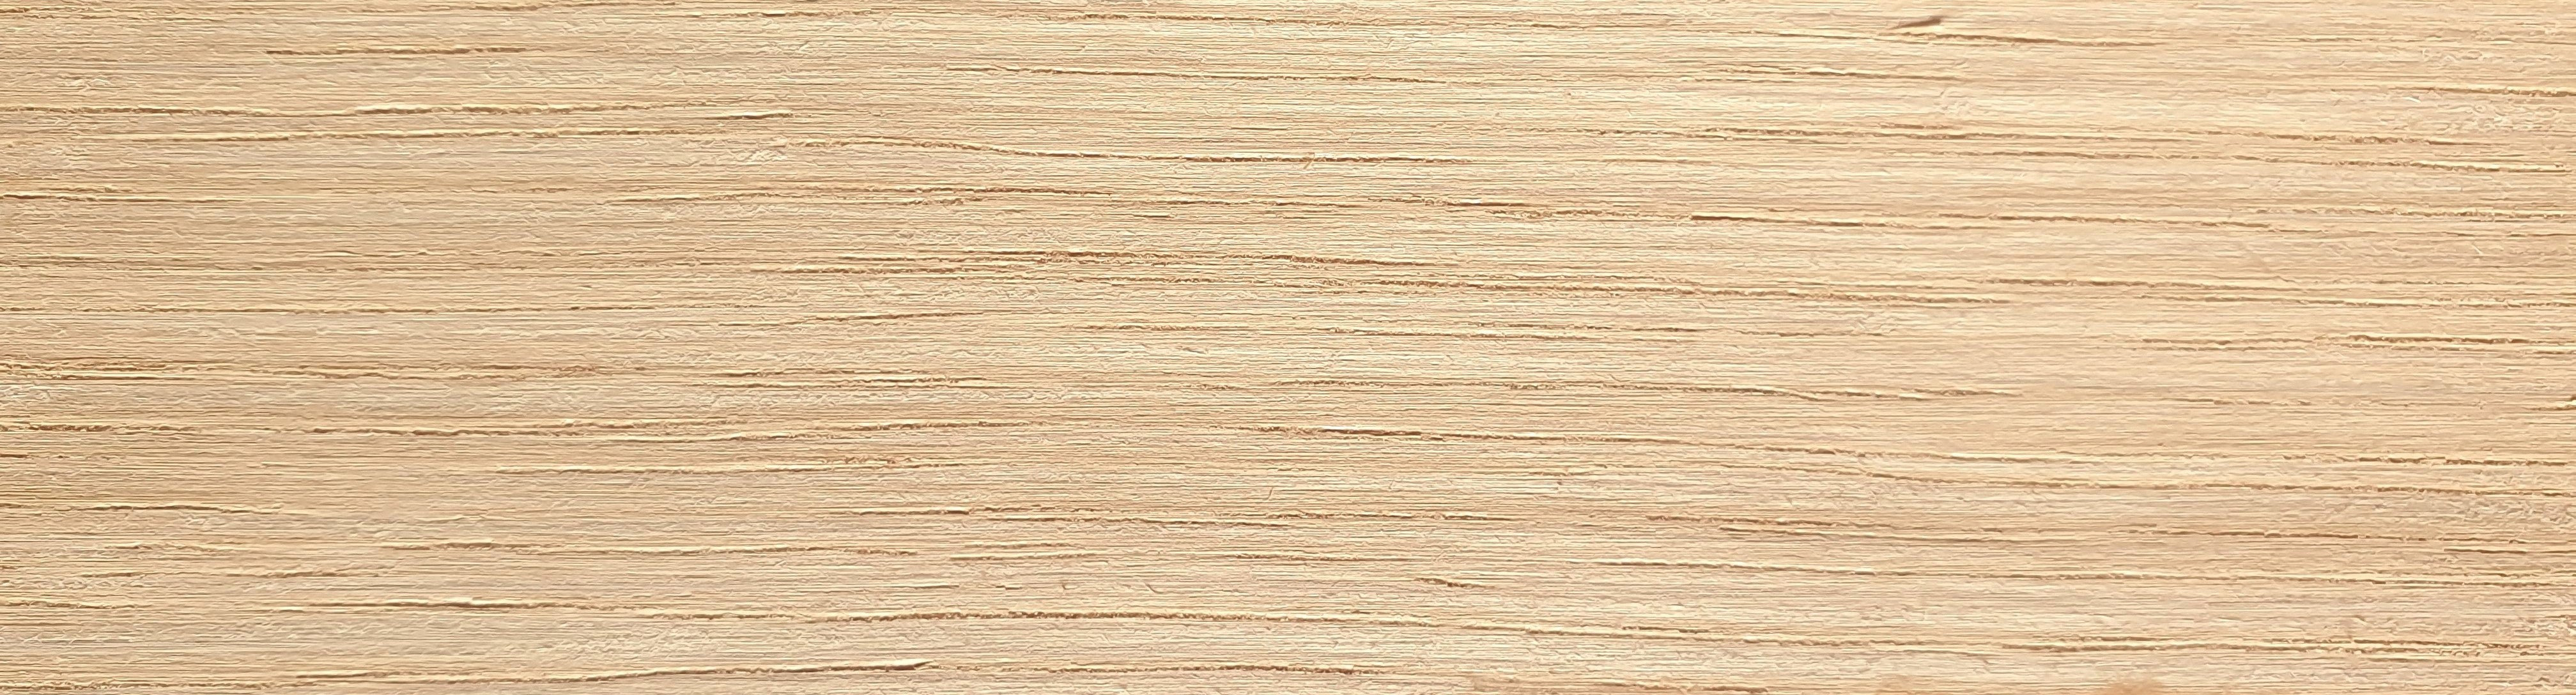 American White Oak Unglued Edging / Lipping 45mm x 2mm Thick Oak Wood Edging x 50 Metres